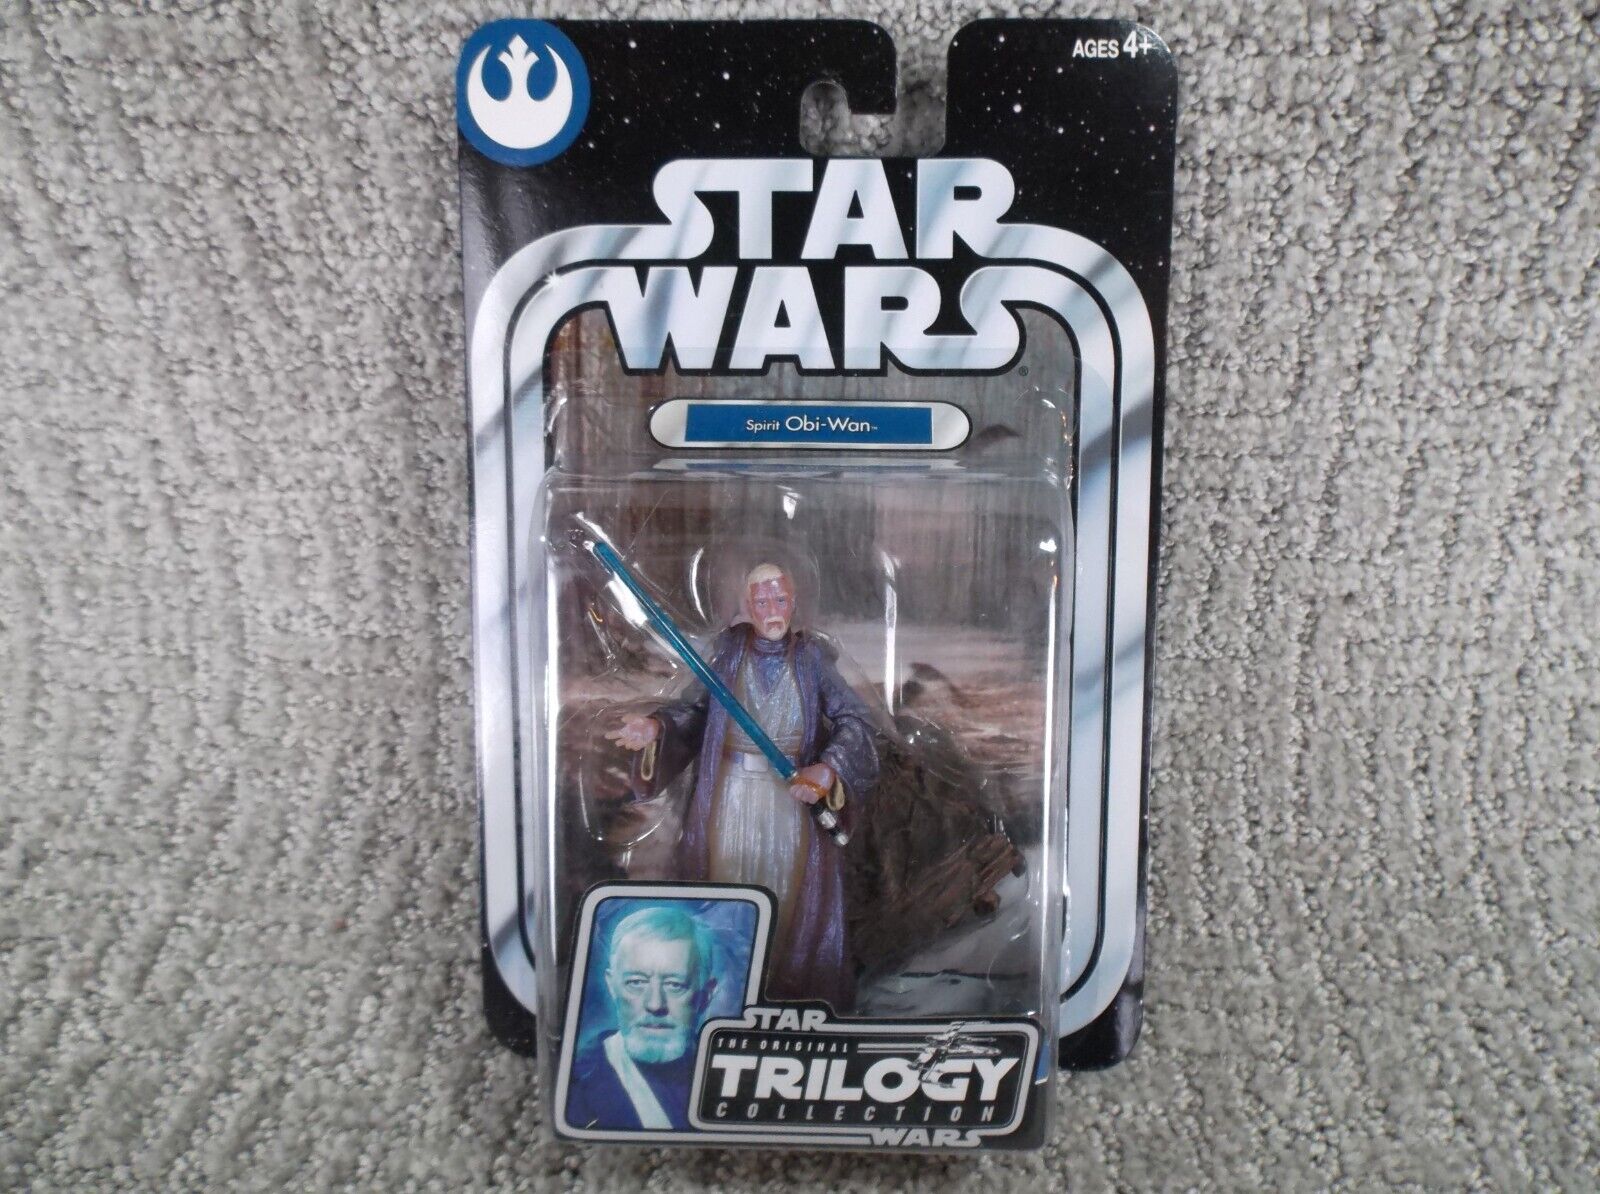 Star Wars Original Trilogy Collection (2004) Hasbro Spirit Obi-Wan Action Figure